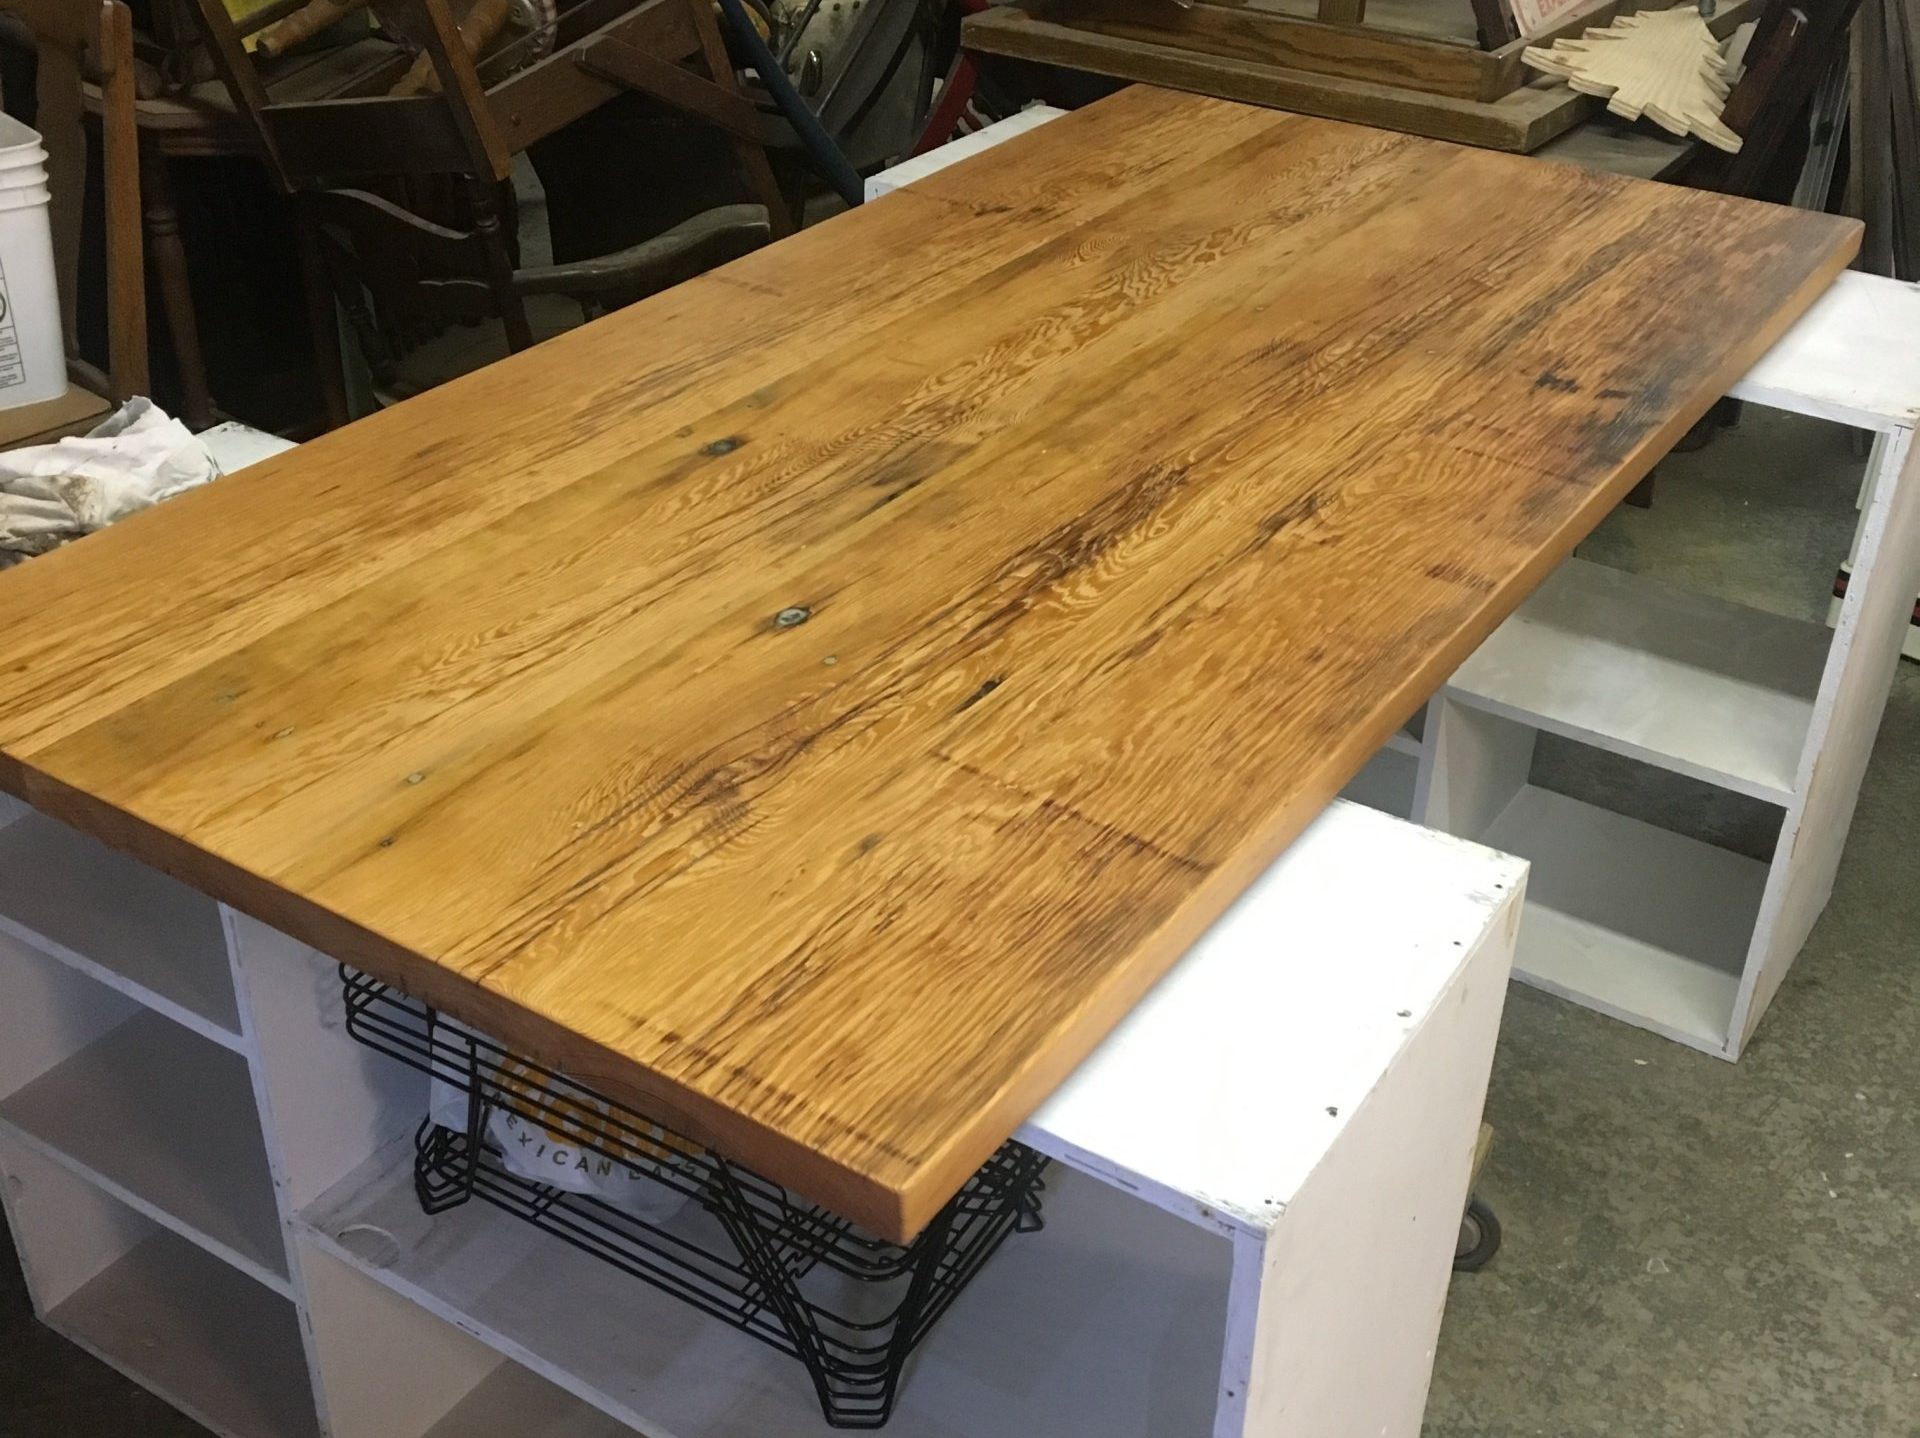 Douglas fir table top.